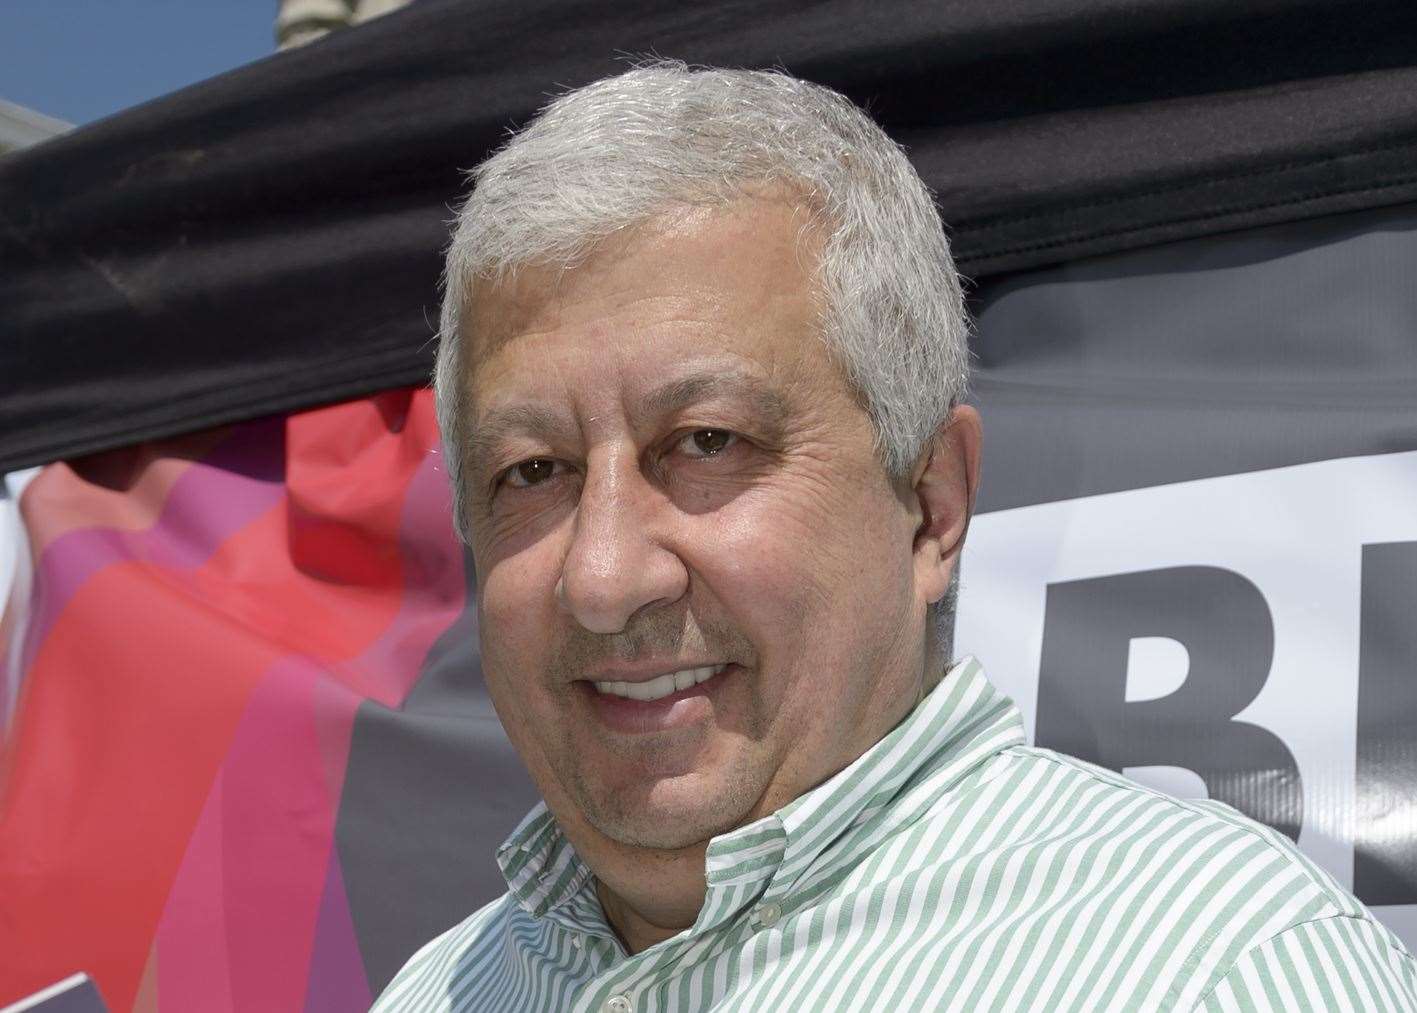 Ali El-Hajj, owner of the Maidstone McDonald's franchises